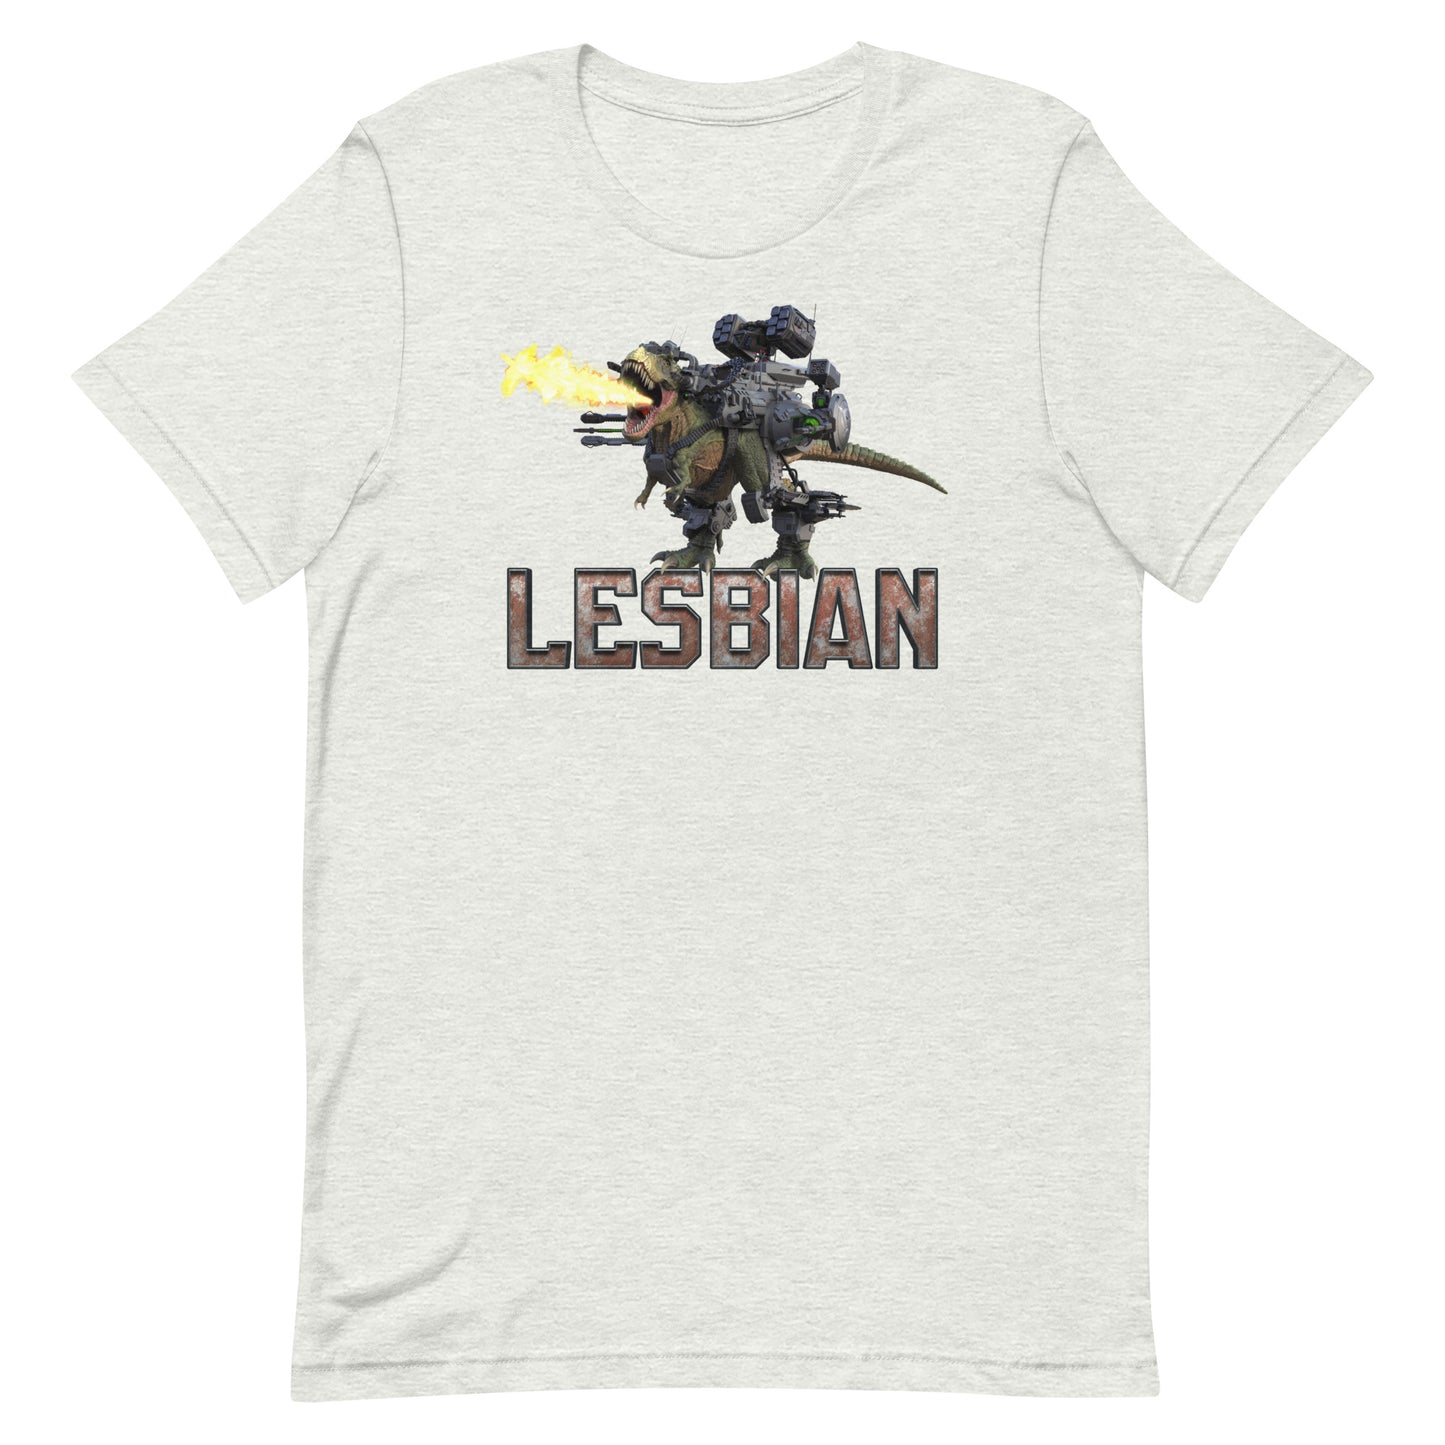 Lesbian Mech Dinosaur Unisex t-shirt